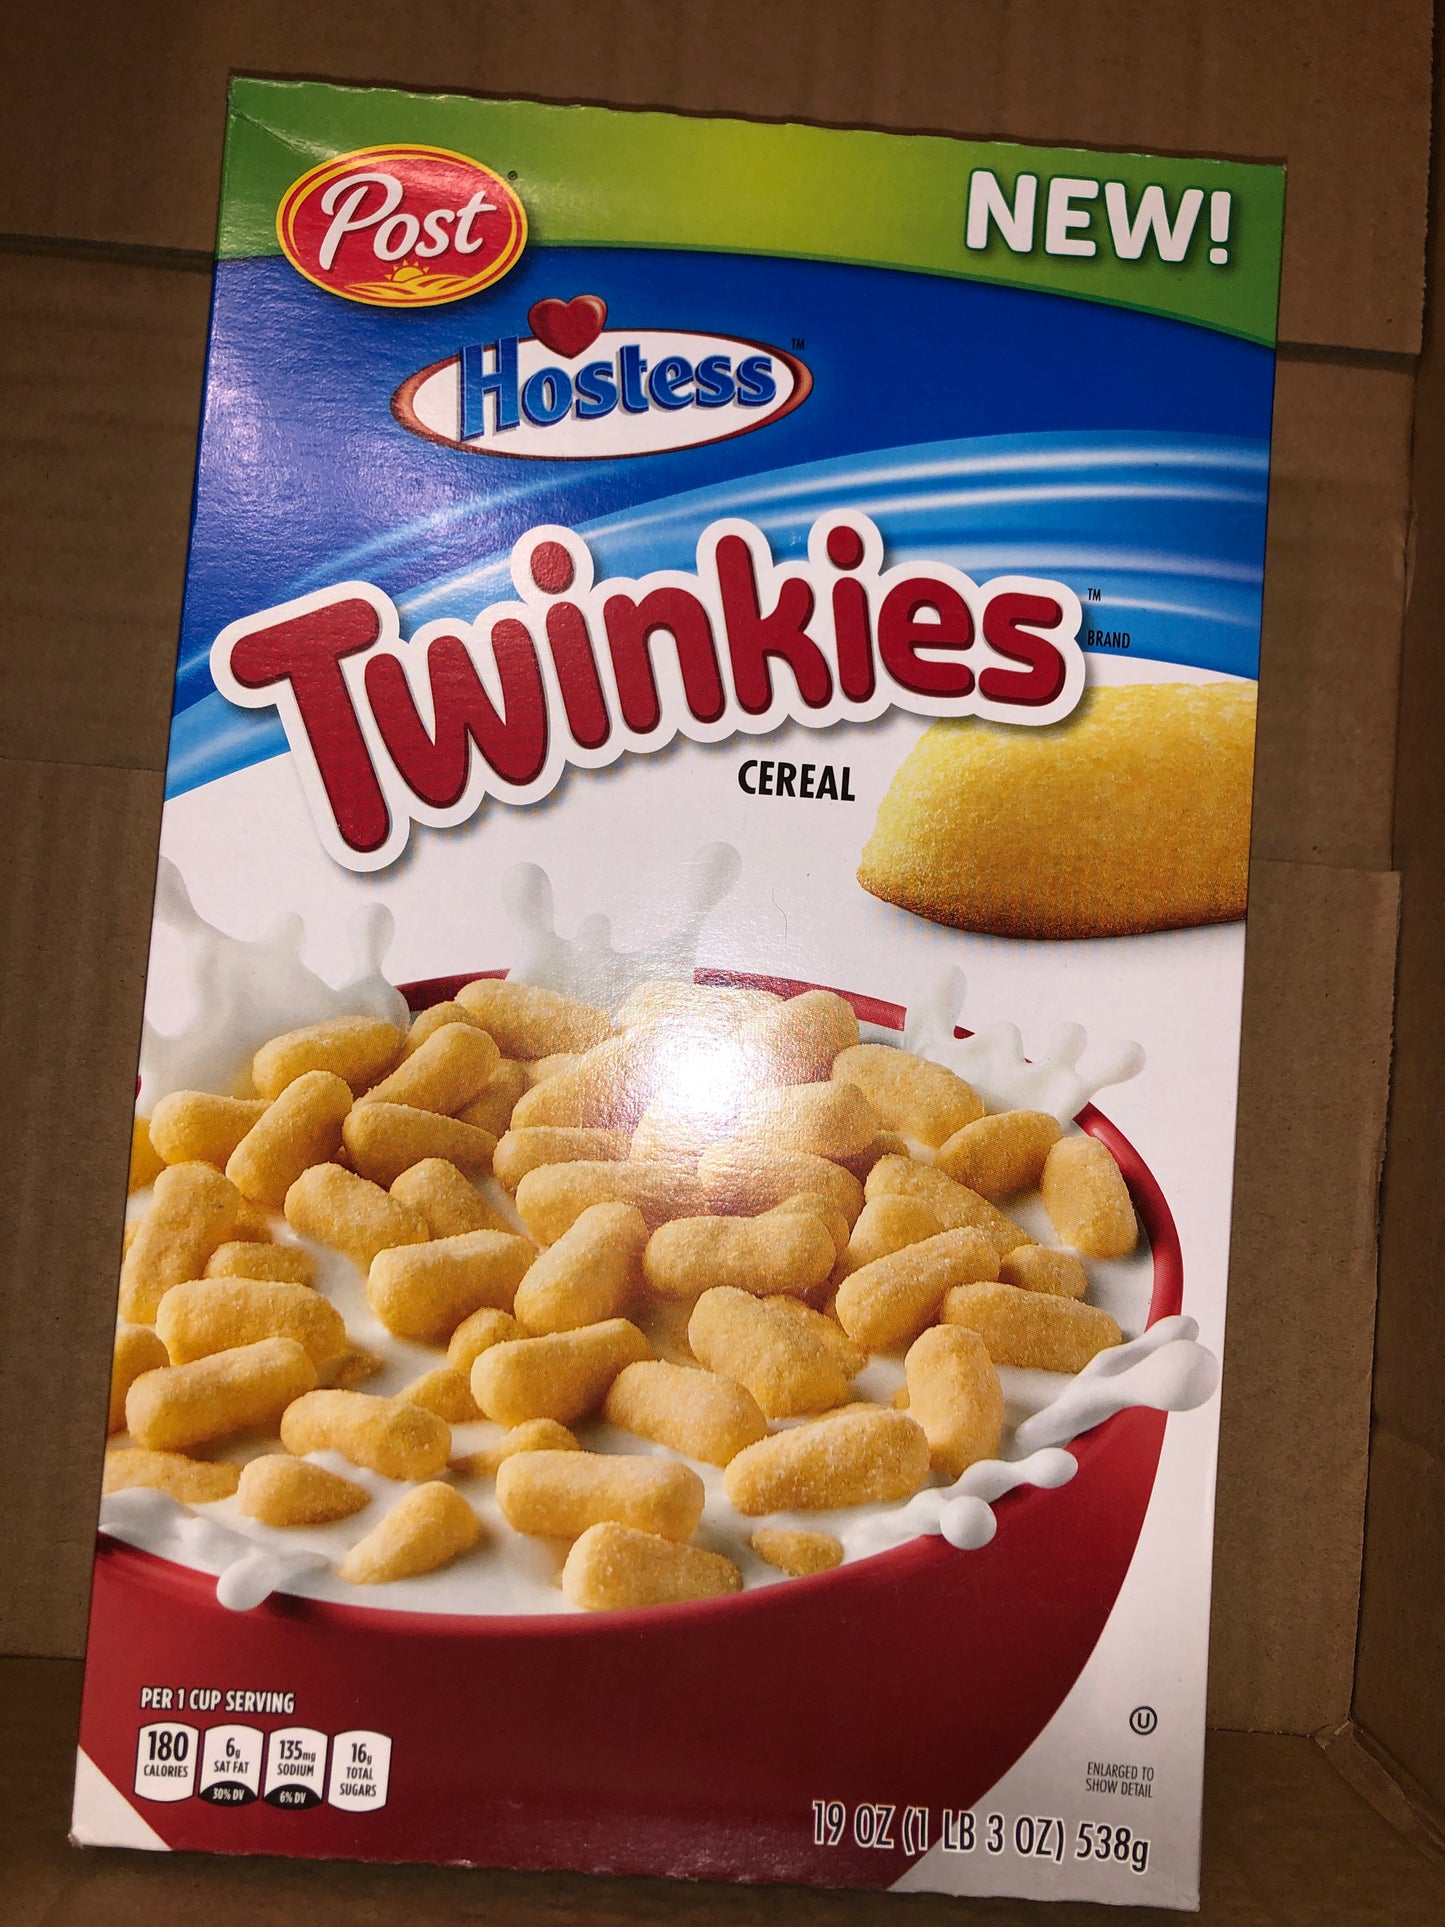 Twinkies Cereal 12oz box